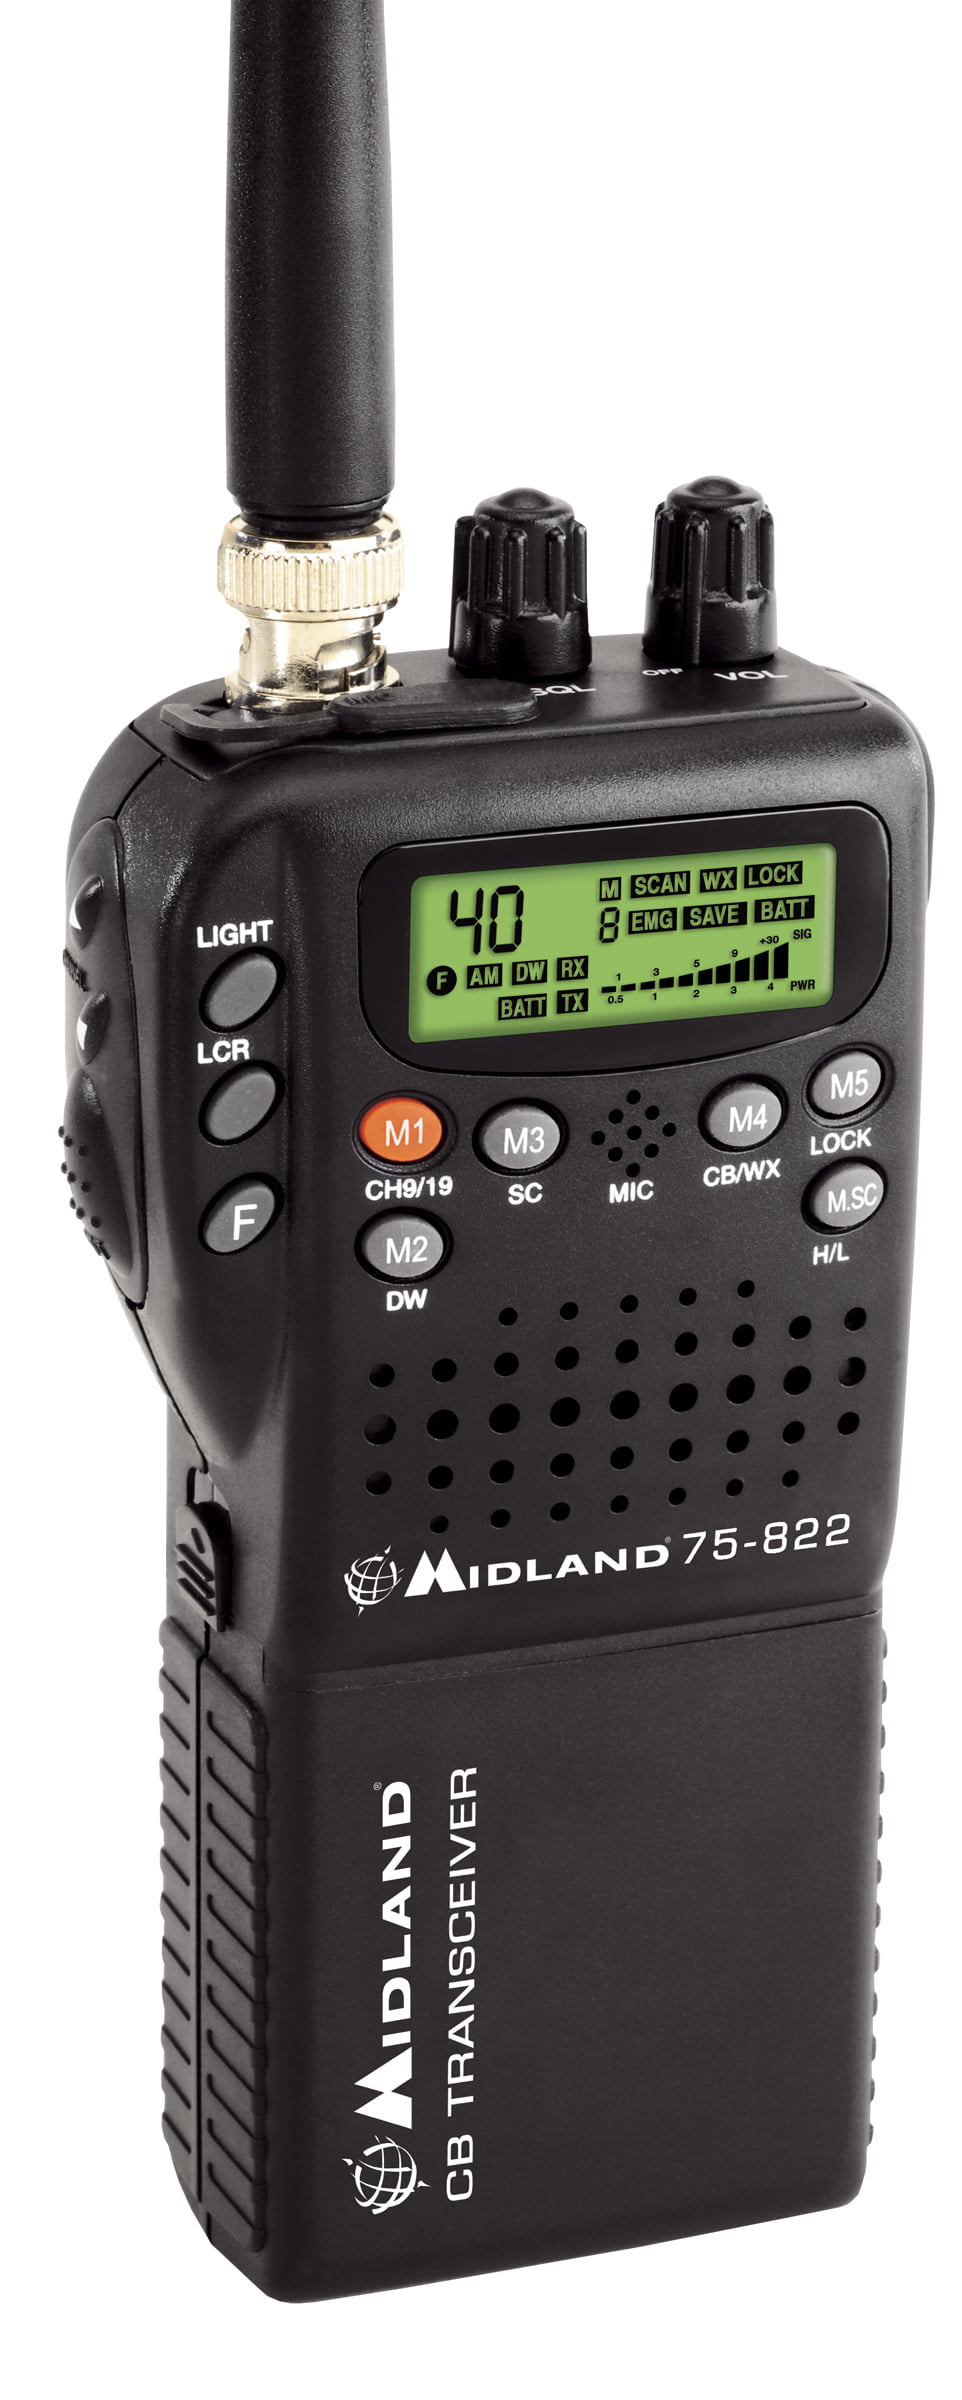 Handheld CB Radios MIDLAND 75-822 Handheld 40-Channel CB Radio ...